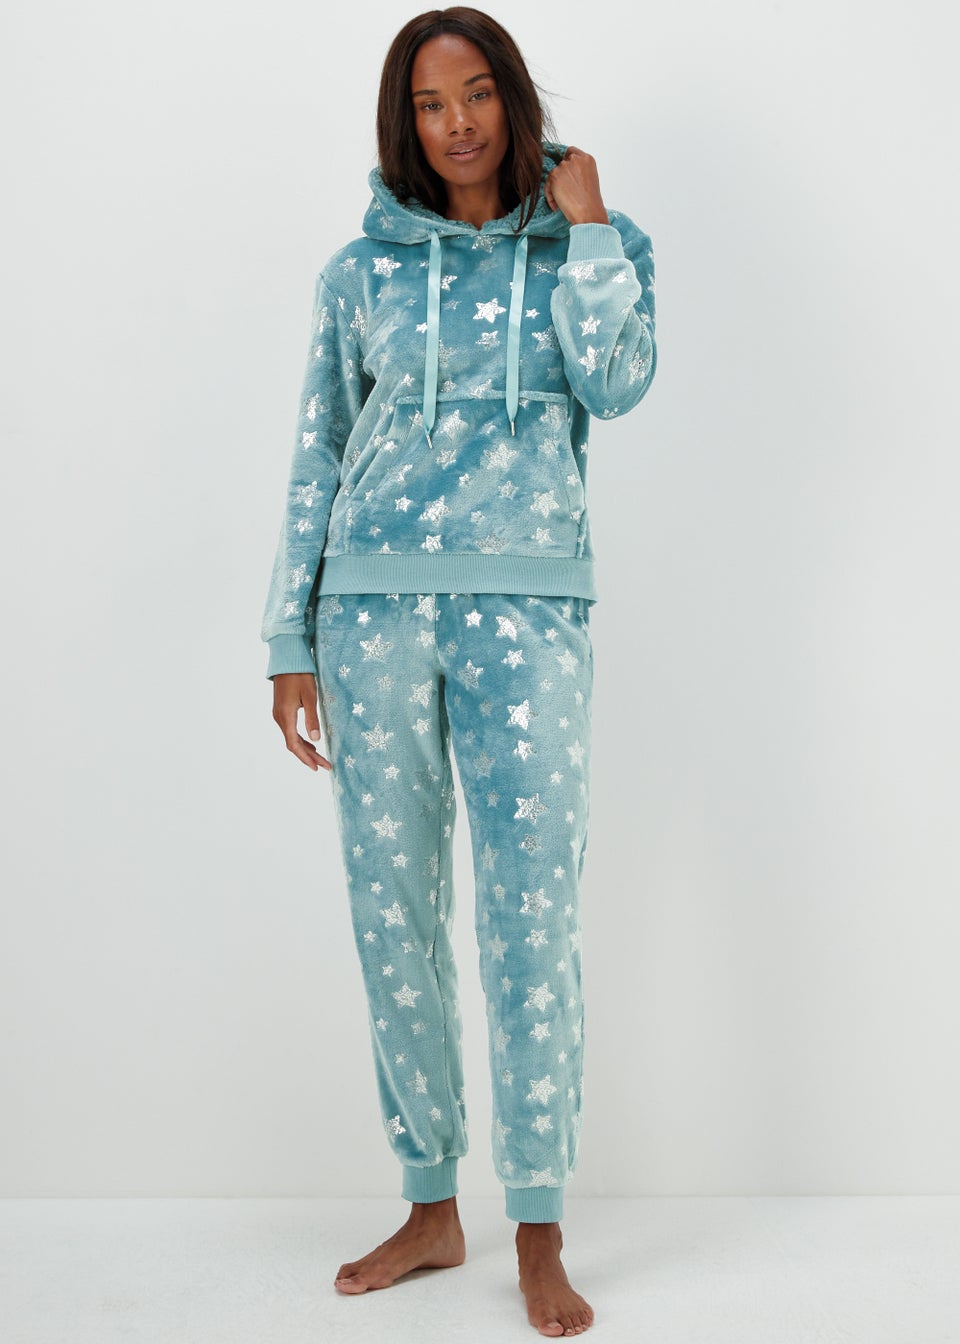 Aqua Foil Star Print Twosie Pyjama Set